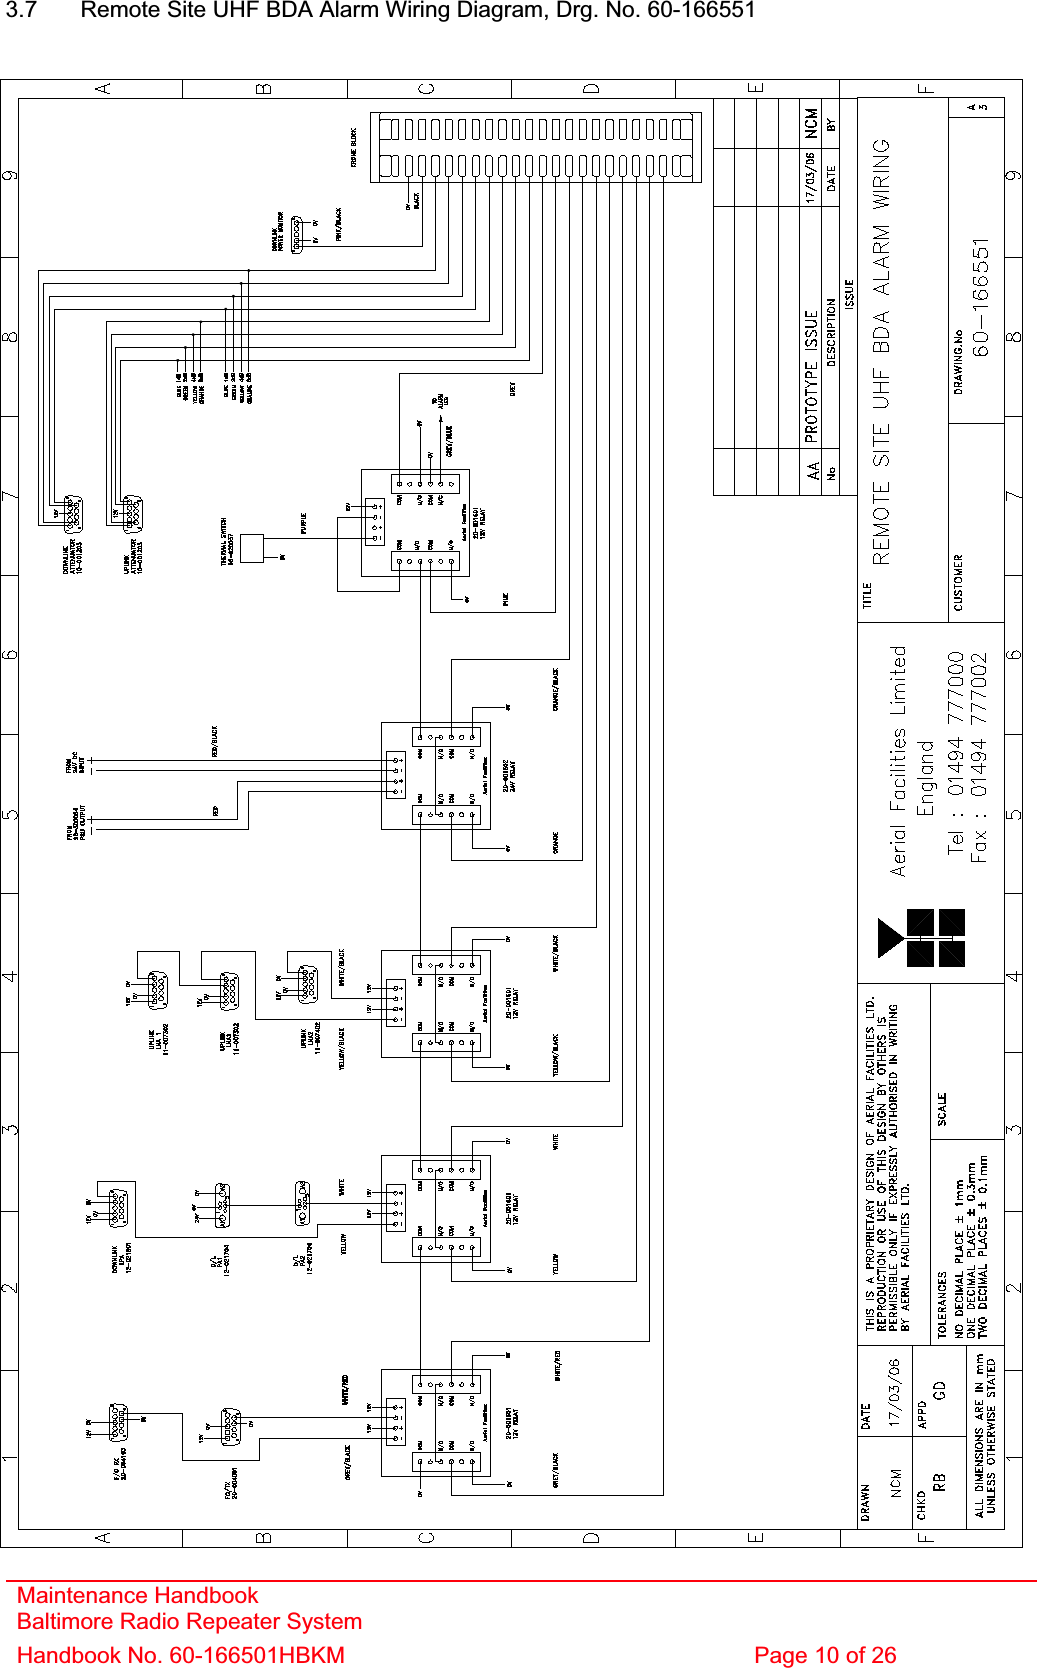 3.7  Remote Site UHF BDA Alarm Wiring Diagram, Drg. No. 60-166551 Maintenance Handbook Baltimore Radio Repeater System Handbook No. 60-166501HBKM  Page 10 of 26 